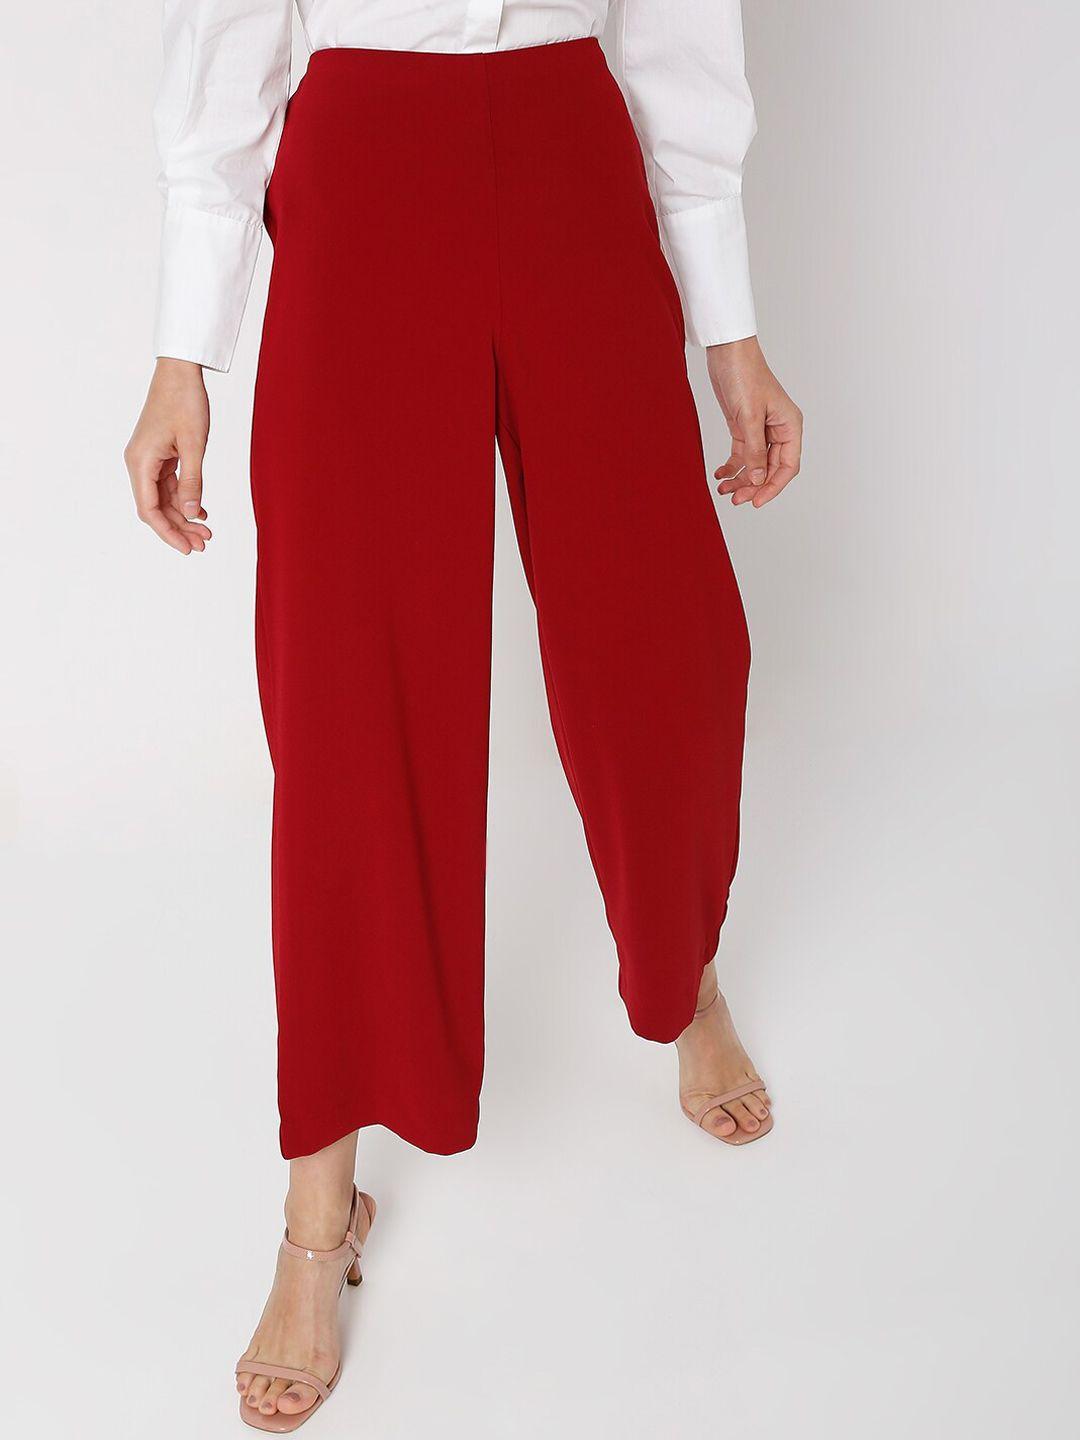 vero moda women red flared high-rise trousers